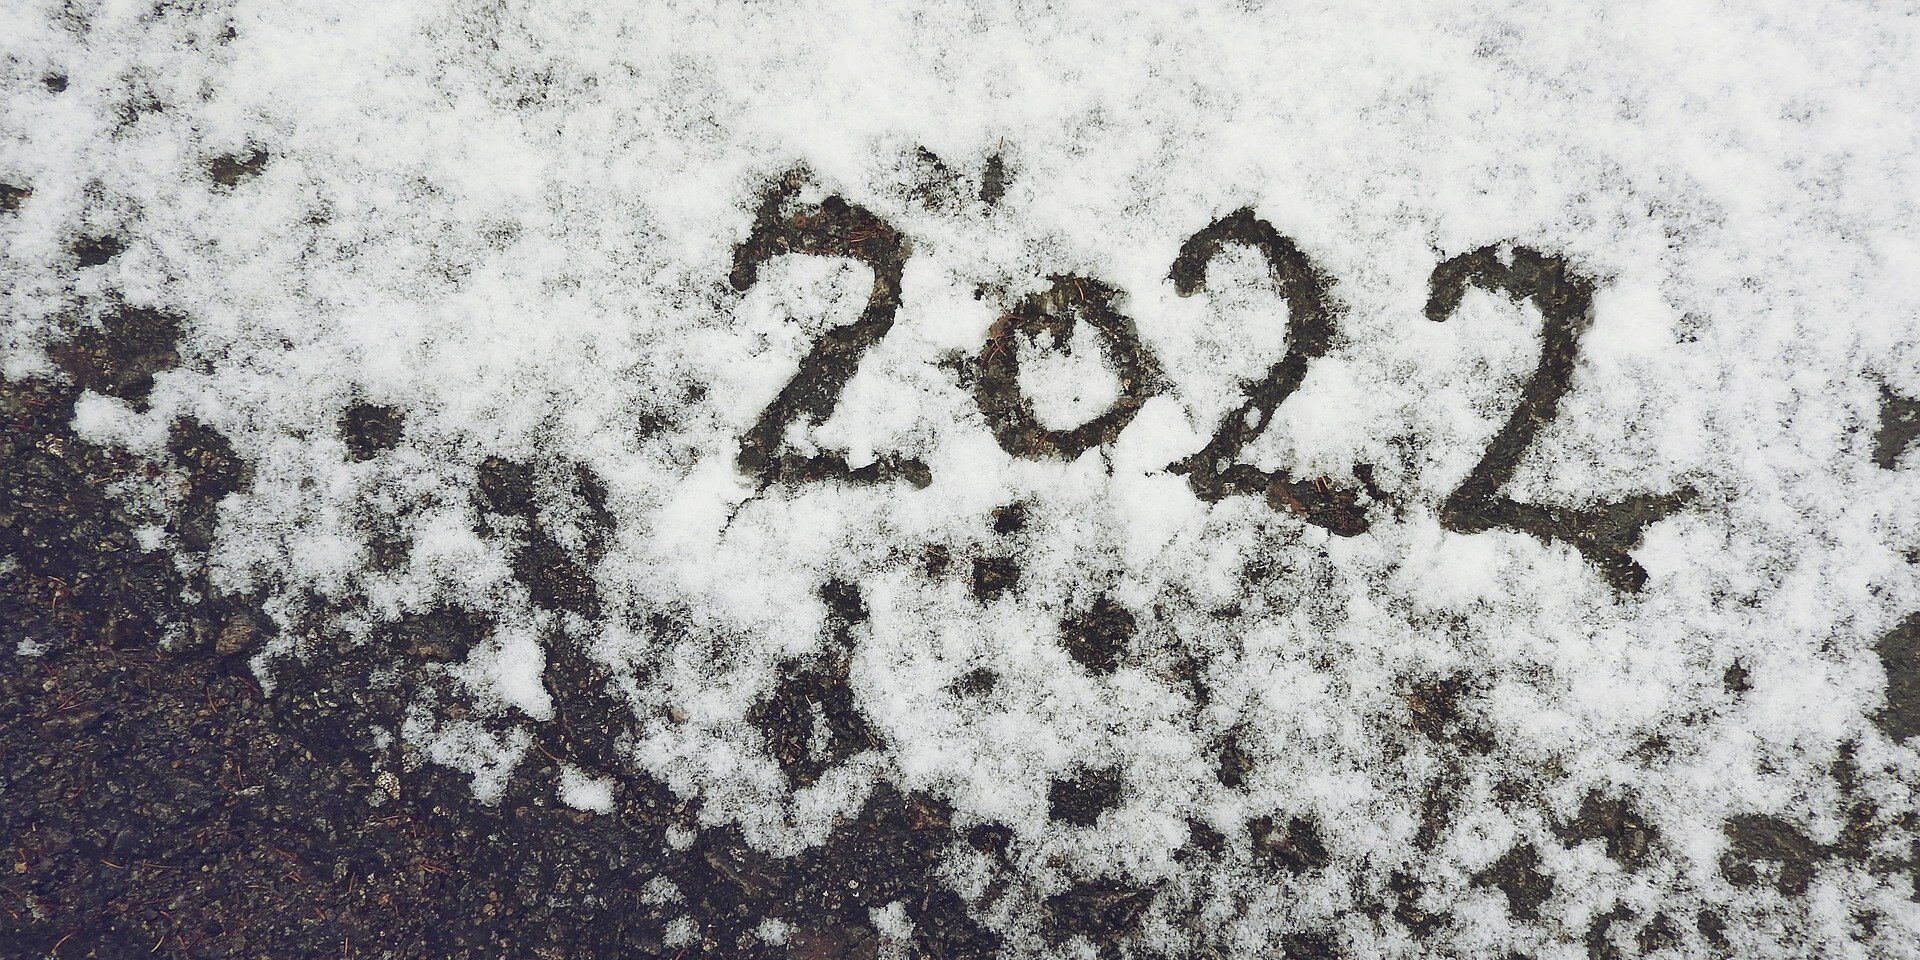 Цифры на снегу - ИноСМИ, 1920, 11.12.2021